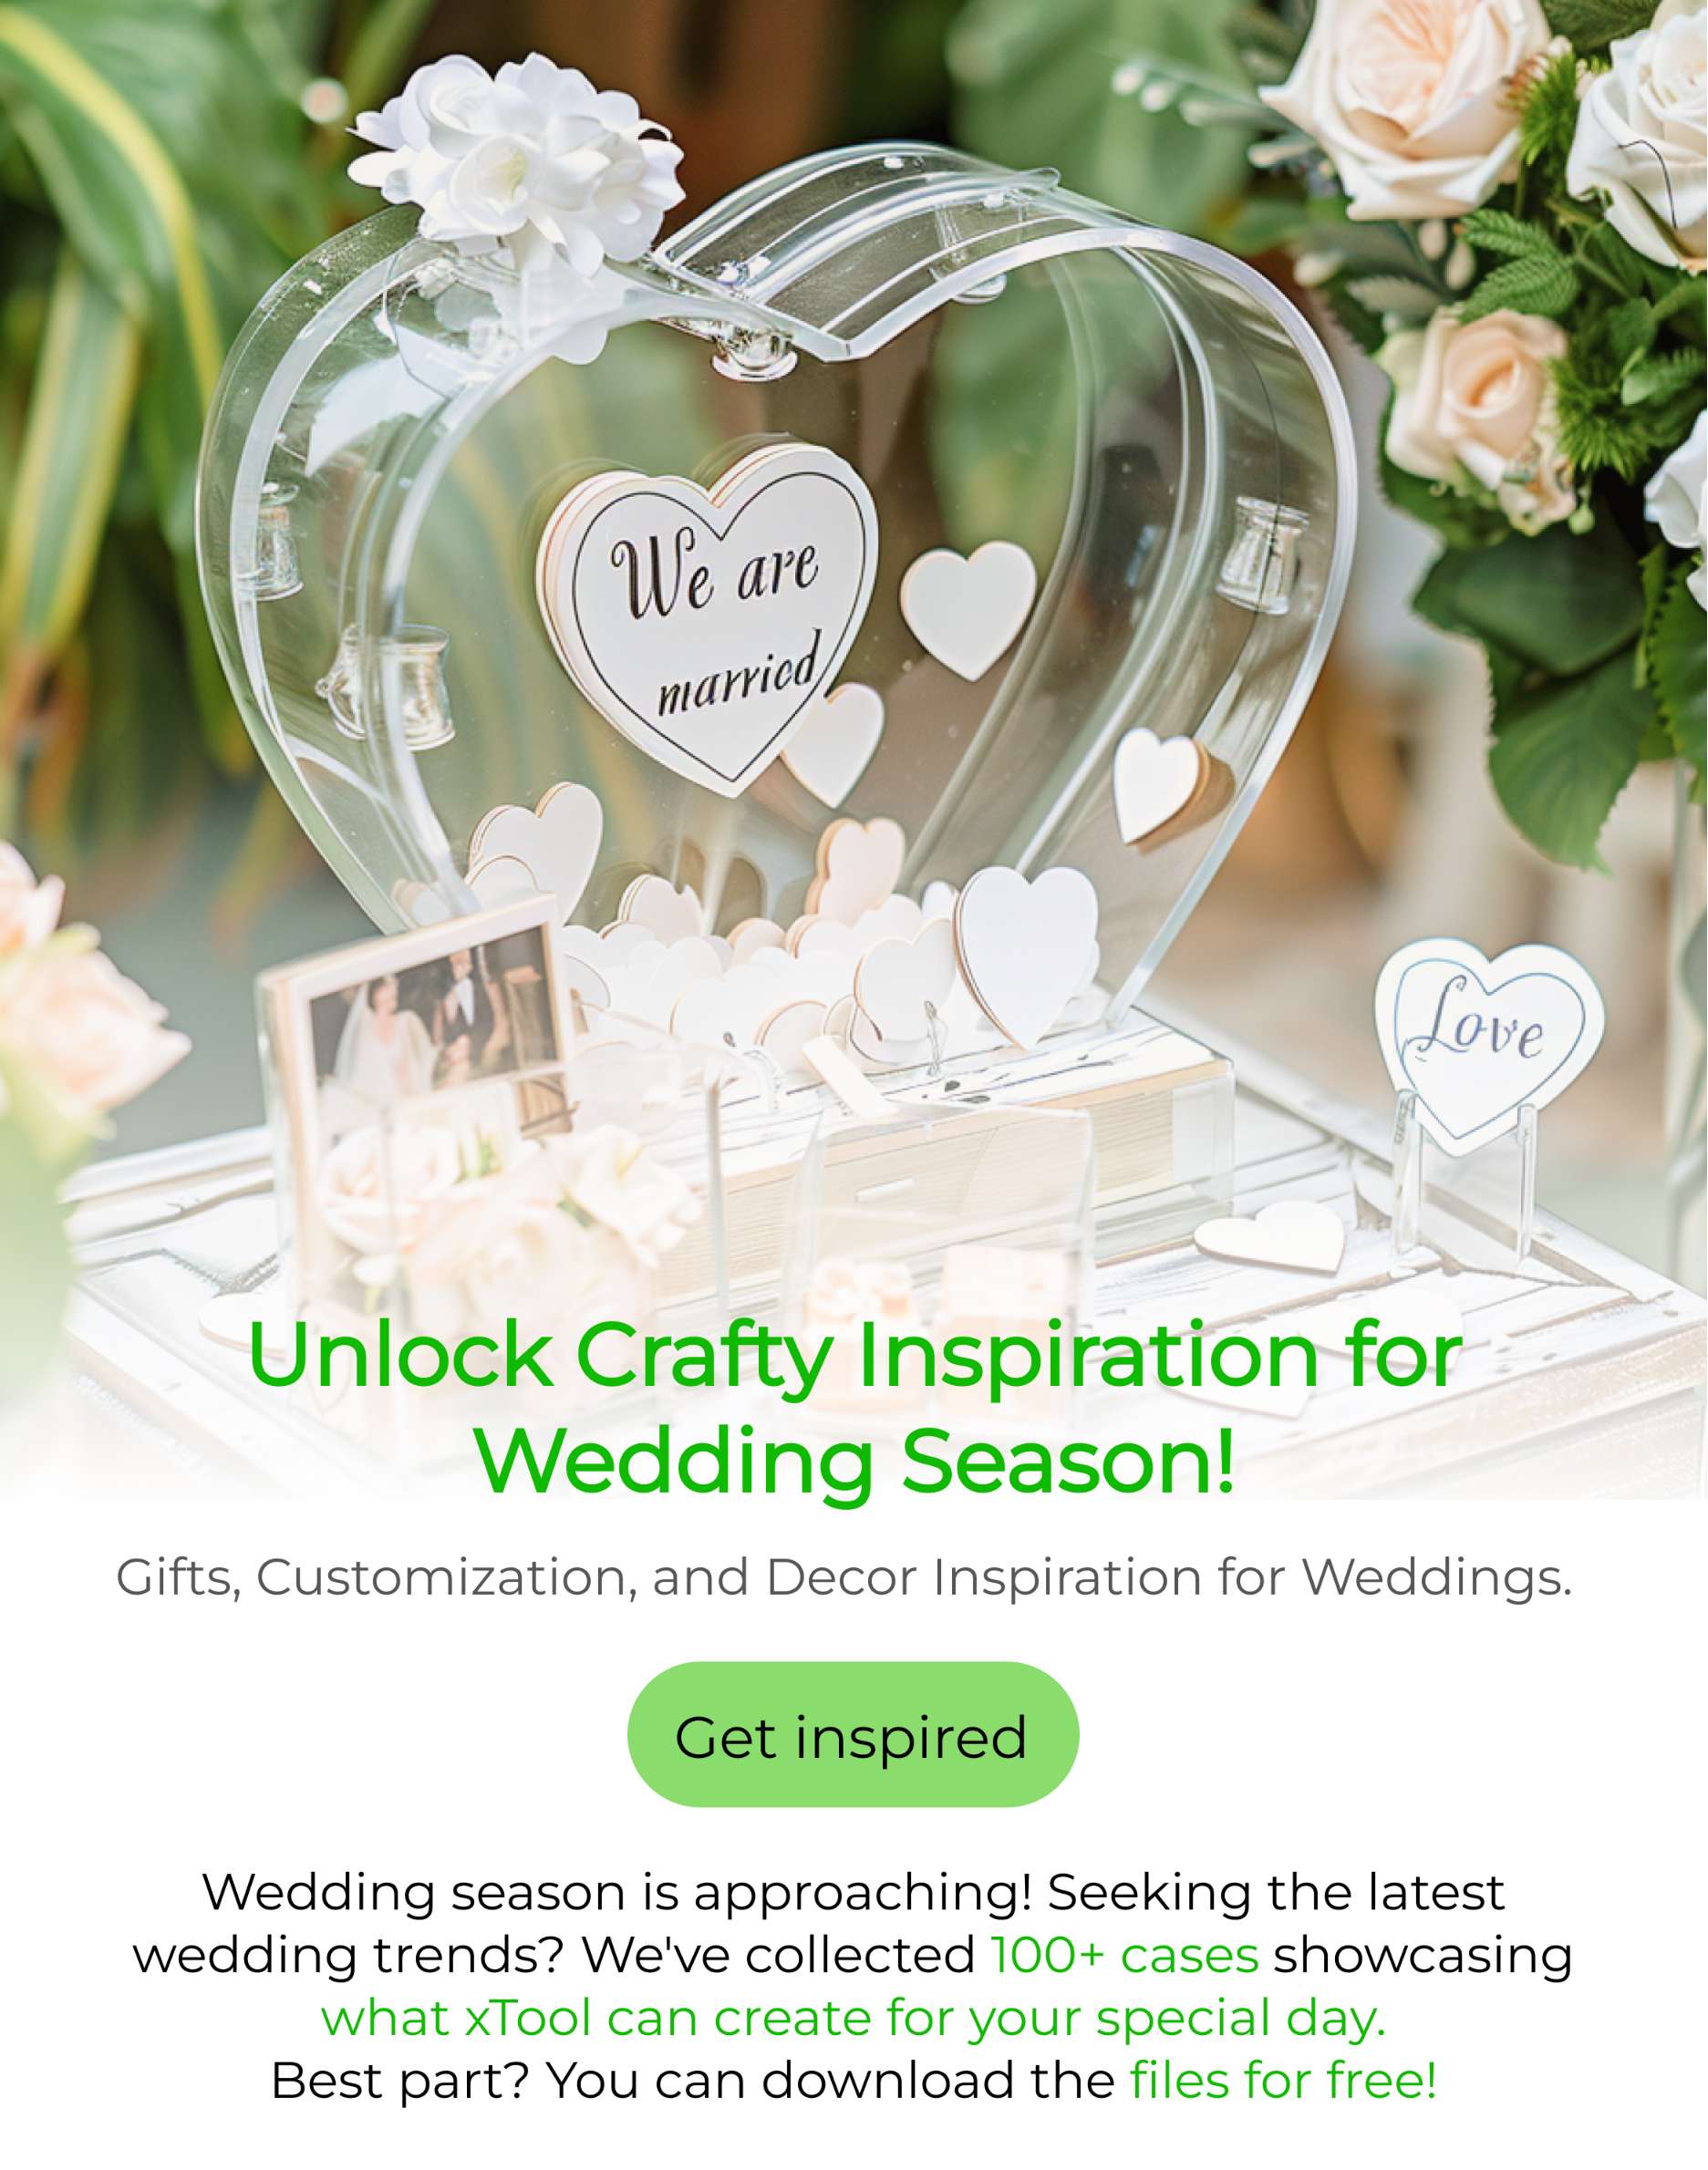 Unlock Crafty Inspiration for Wedding Season!